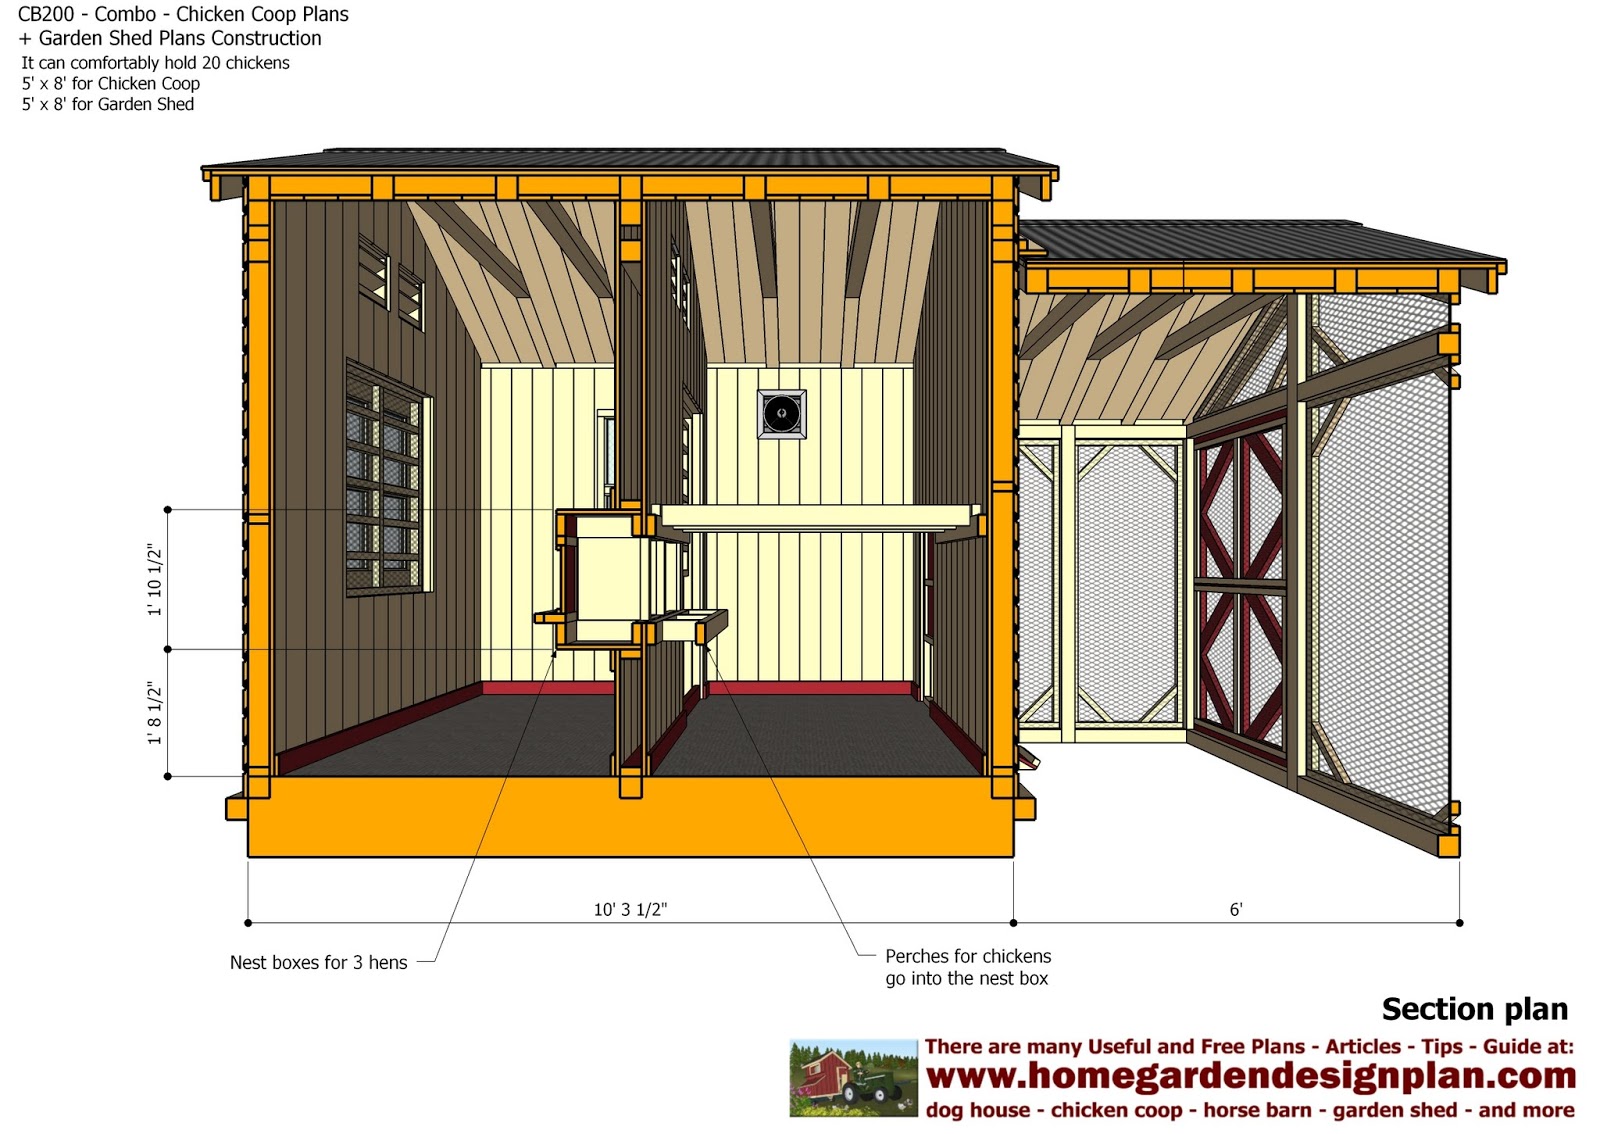 home garden plans: CB200 - Combo Plans - Chicken Coop ...